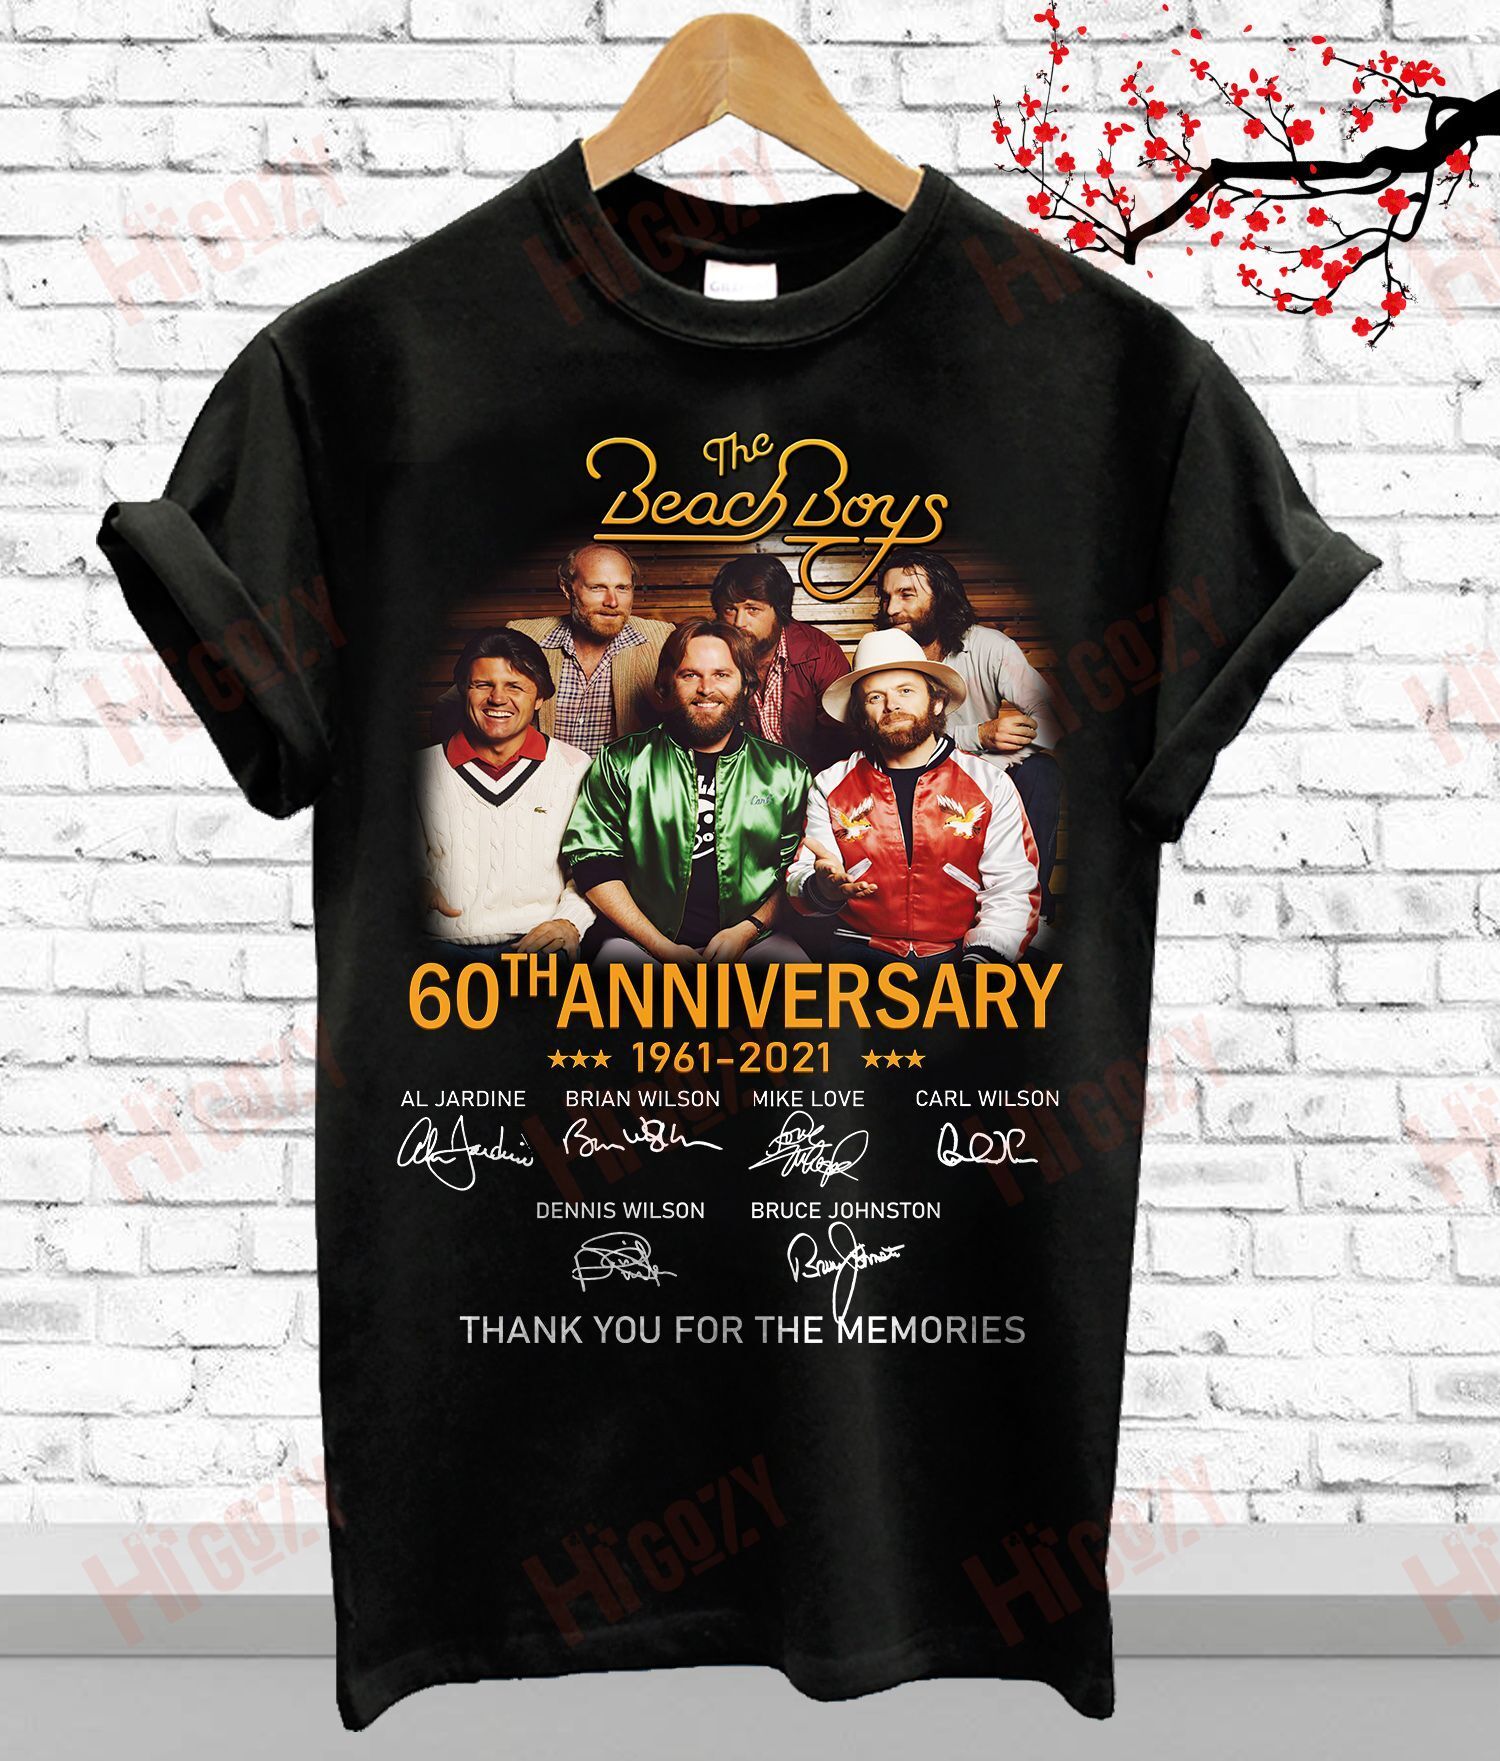 The Beach Boys Shirt, The Beach Boys Band Shirts, T-Shirt 2D – Spnv178 ...